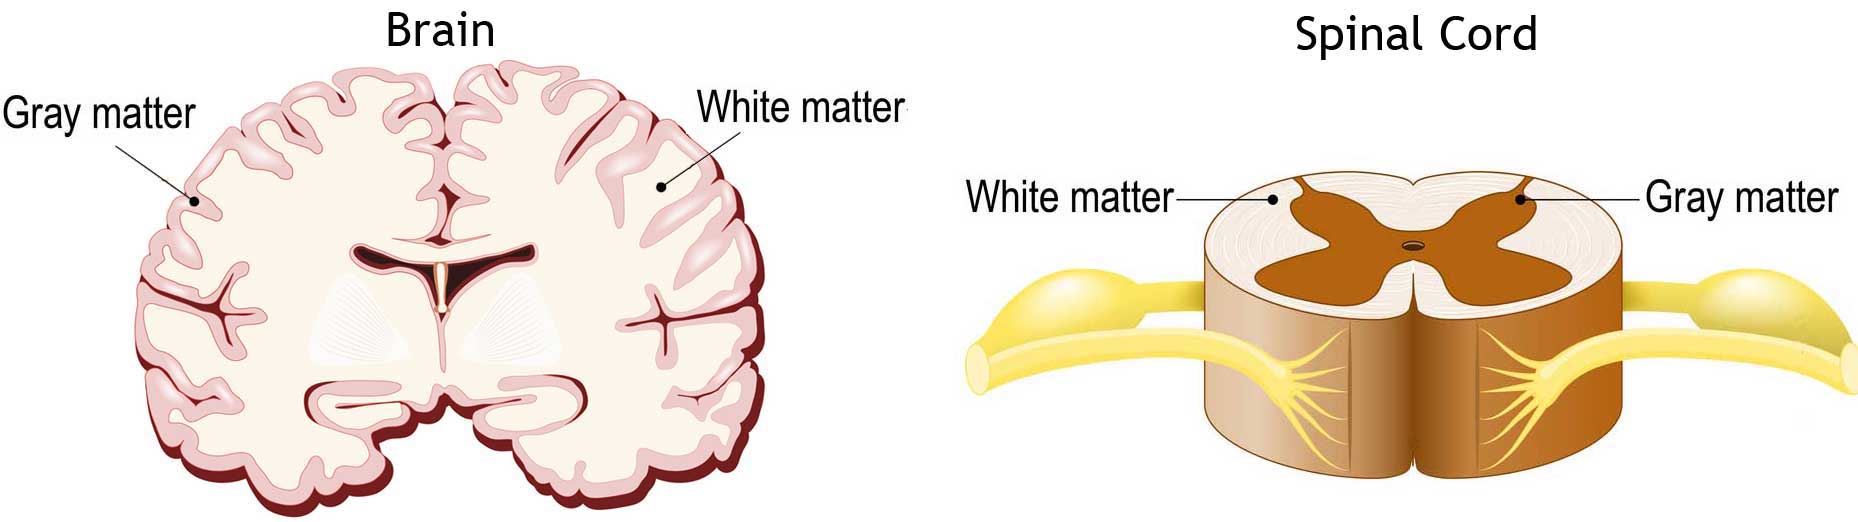 Brain Spine Gray And White Matter 